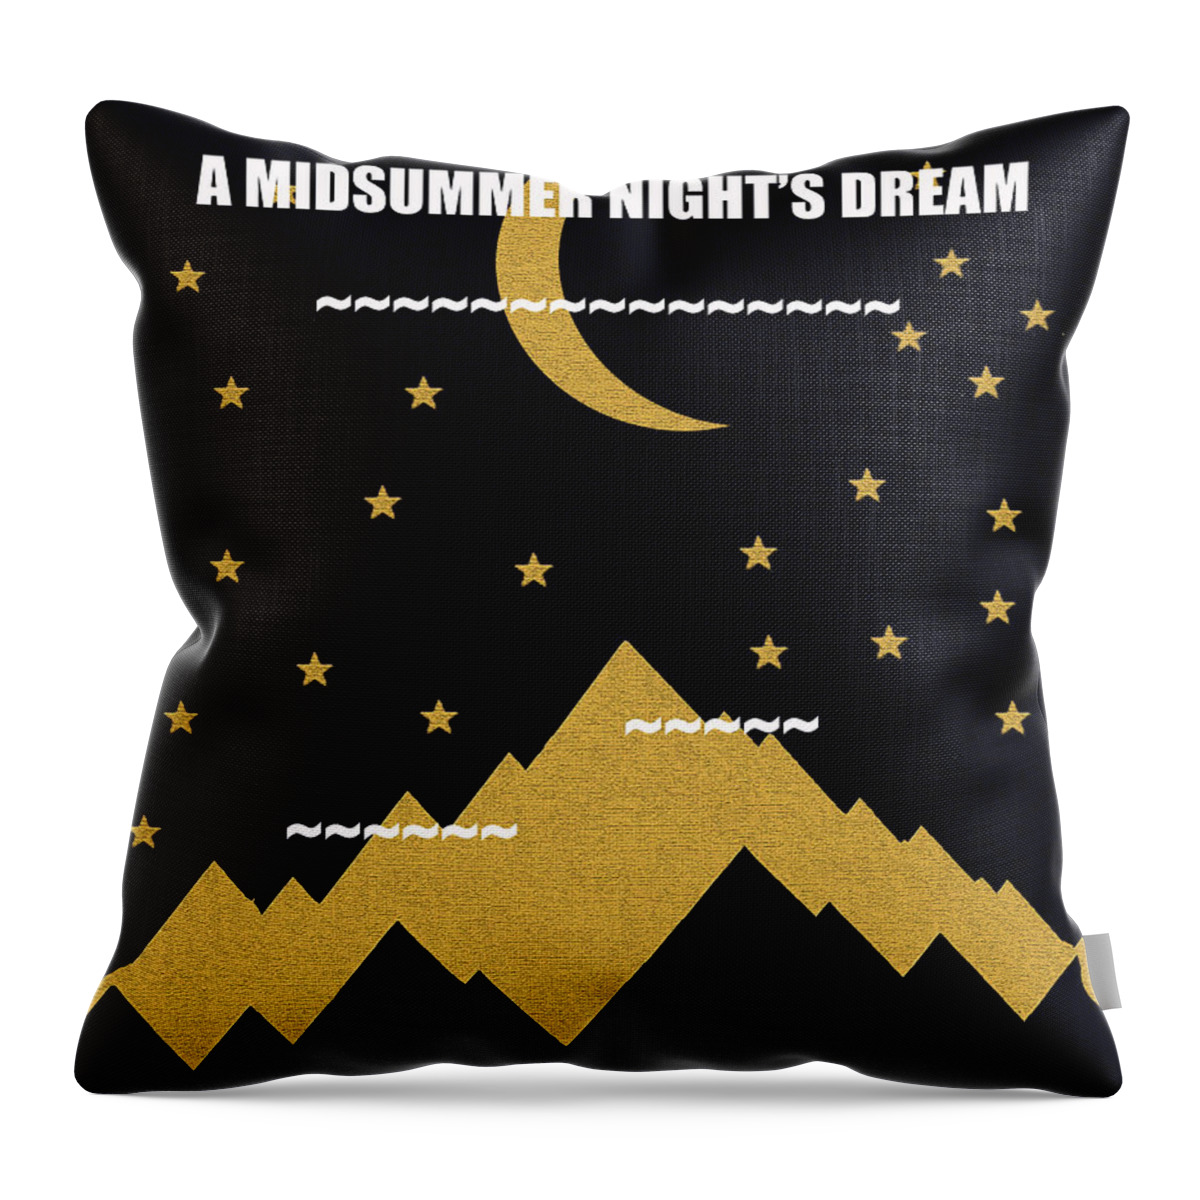 A Midsummers Nights Dream Throw Pillow featuring the digital art A midsummer night's dream minimalsim book cover art by David Lee Thompson